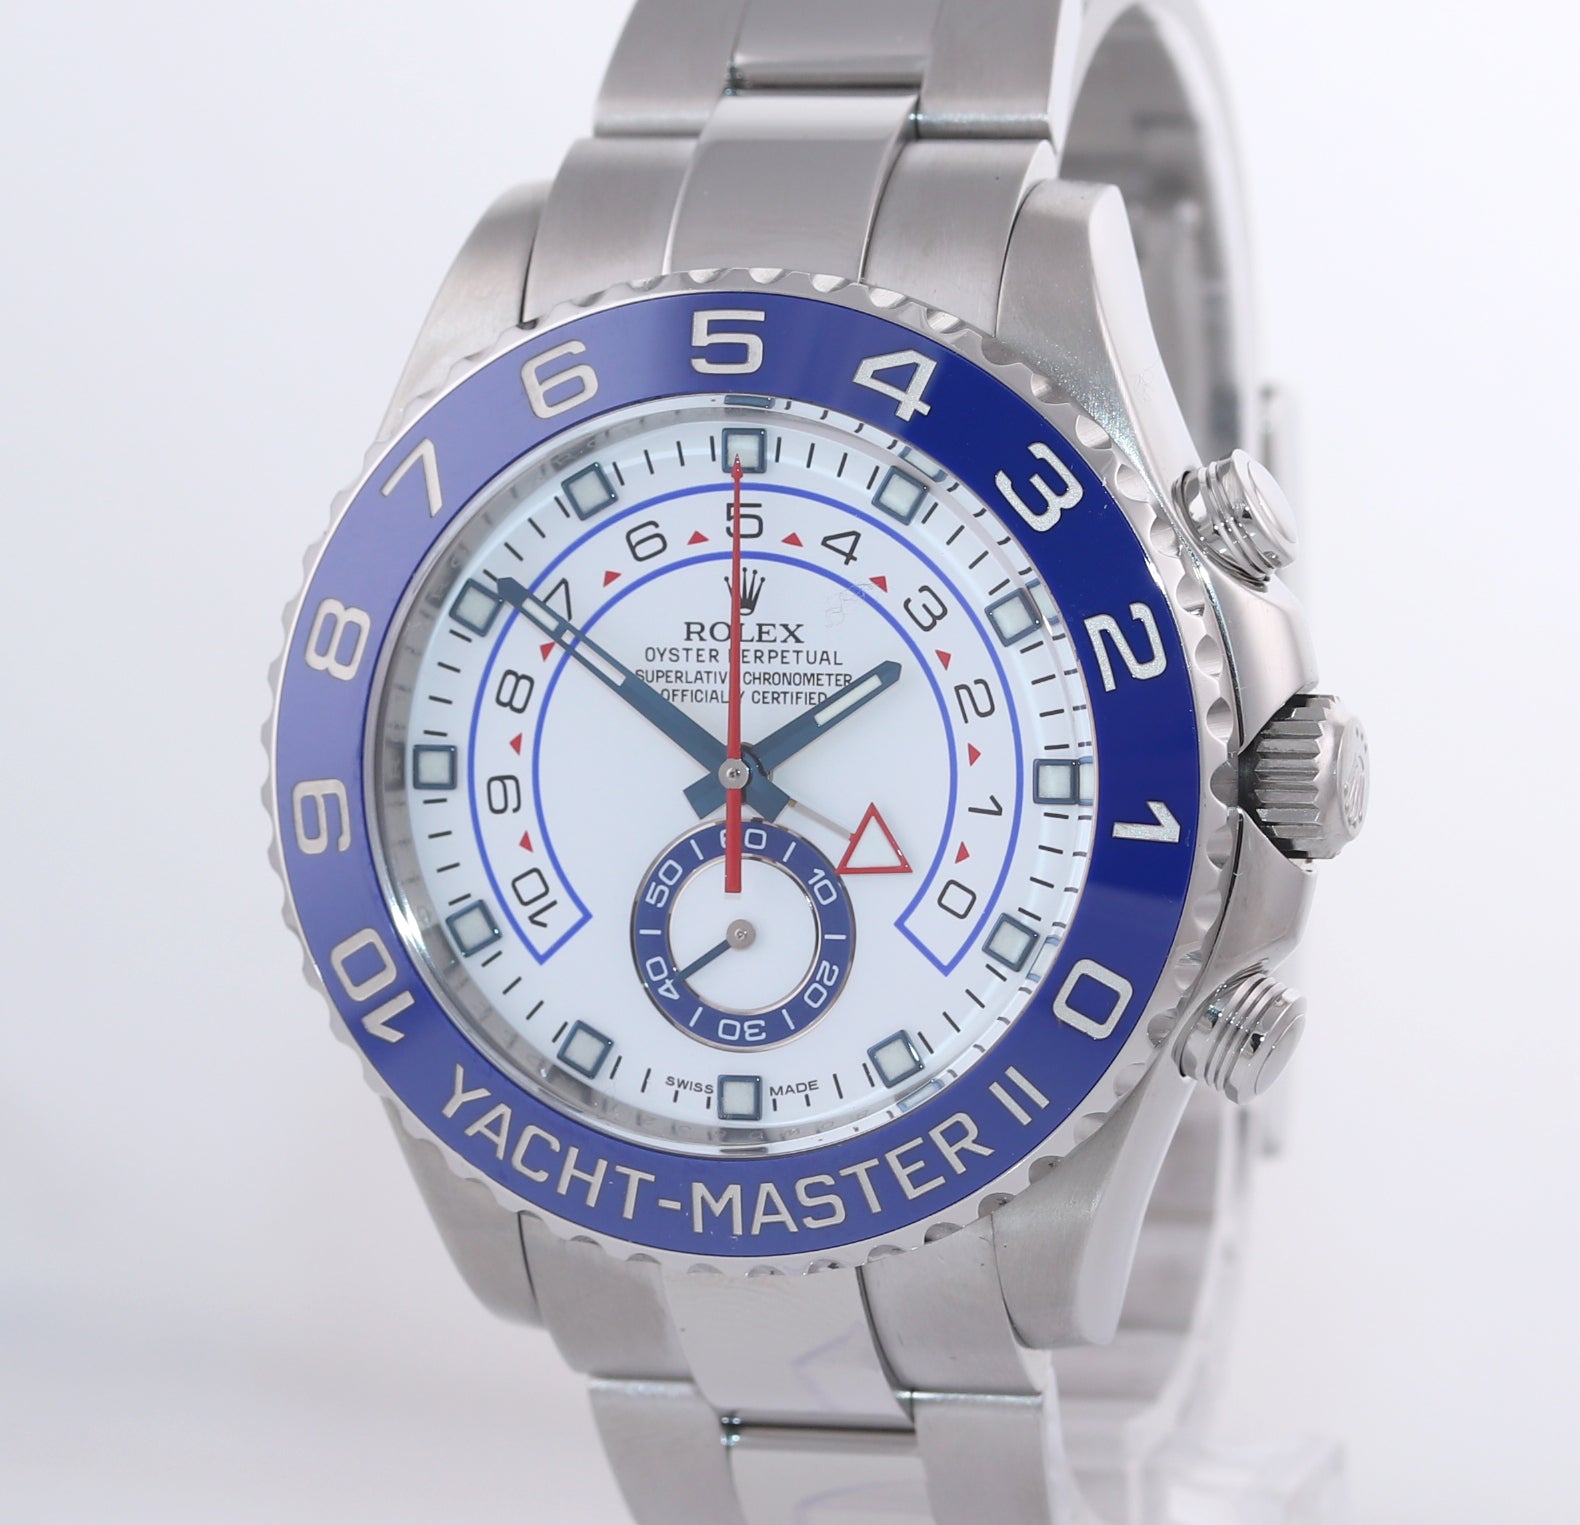 PAPERS MINT 2016 Rolex Yacht-Master II 44mm Steel Random Ceramic 116680 Watch